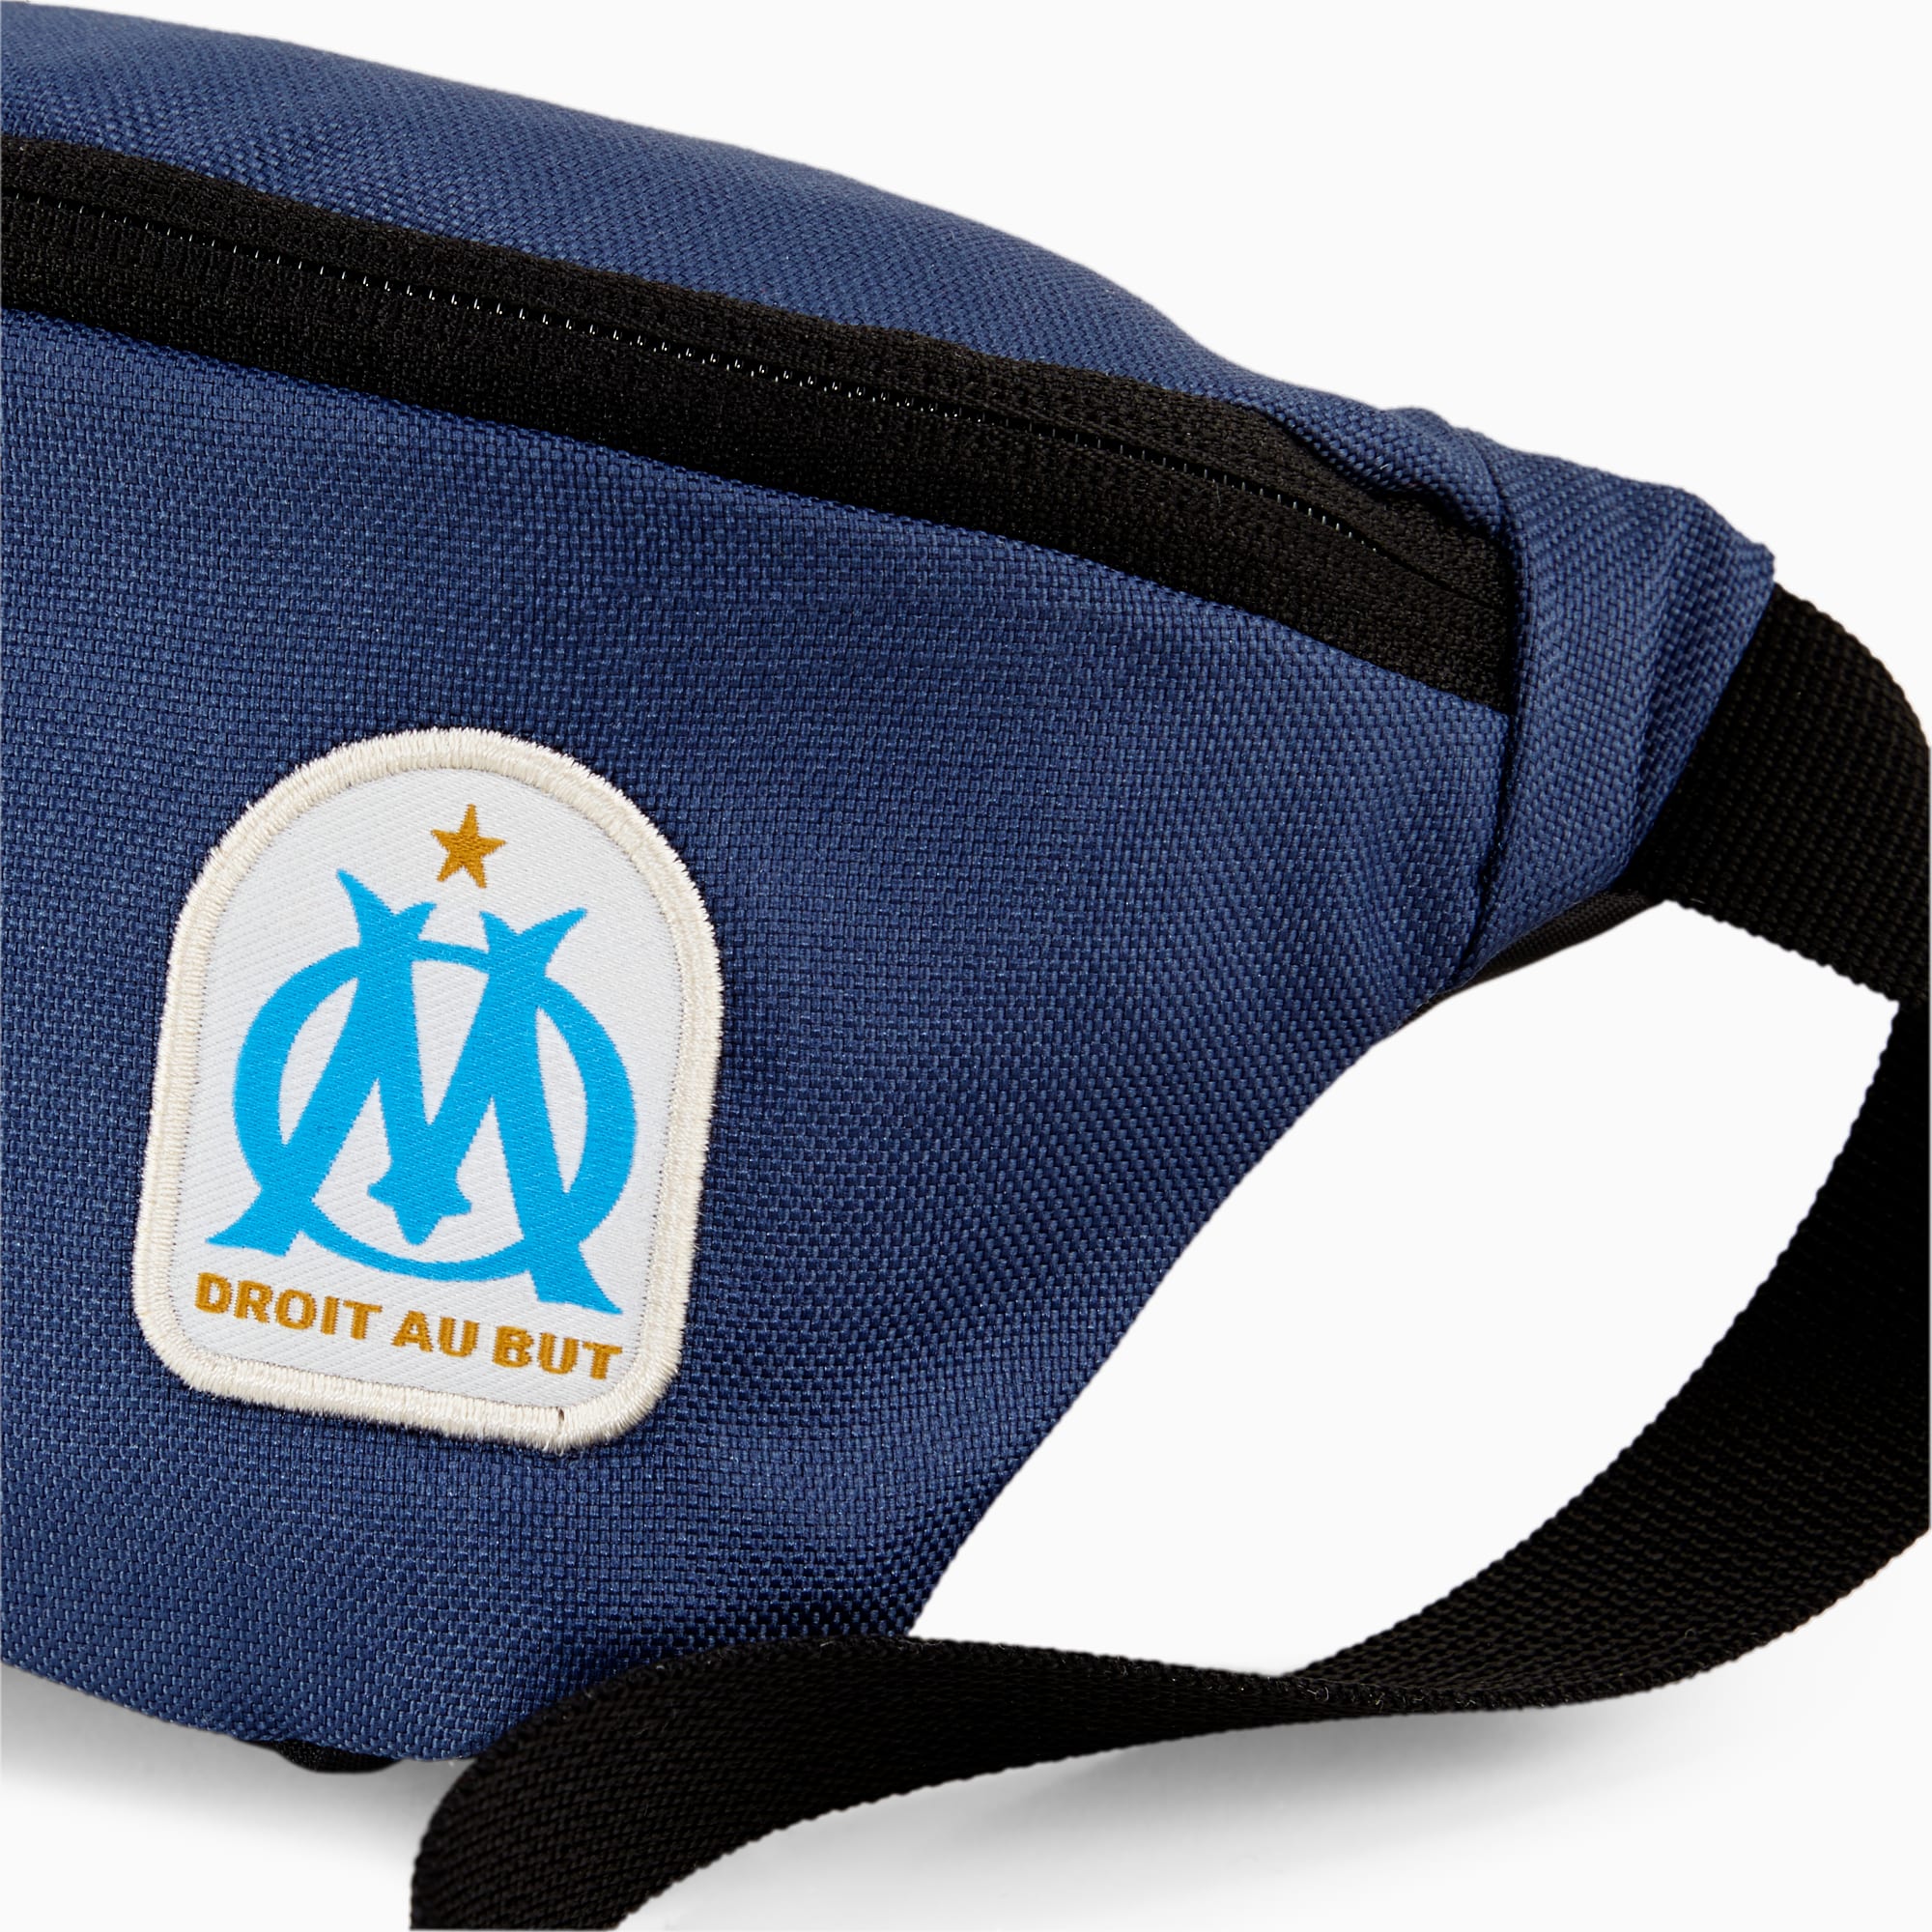 Women's PUMA Olympique De Marseille Waist Bag, Dark Blue, Accessories